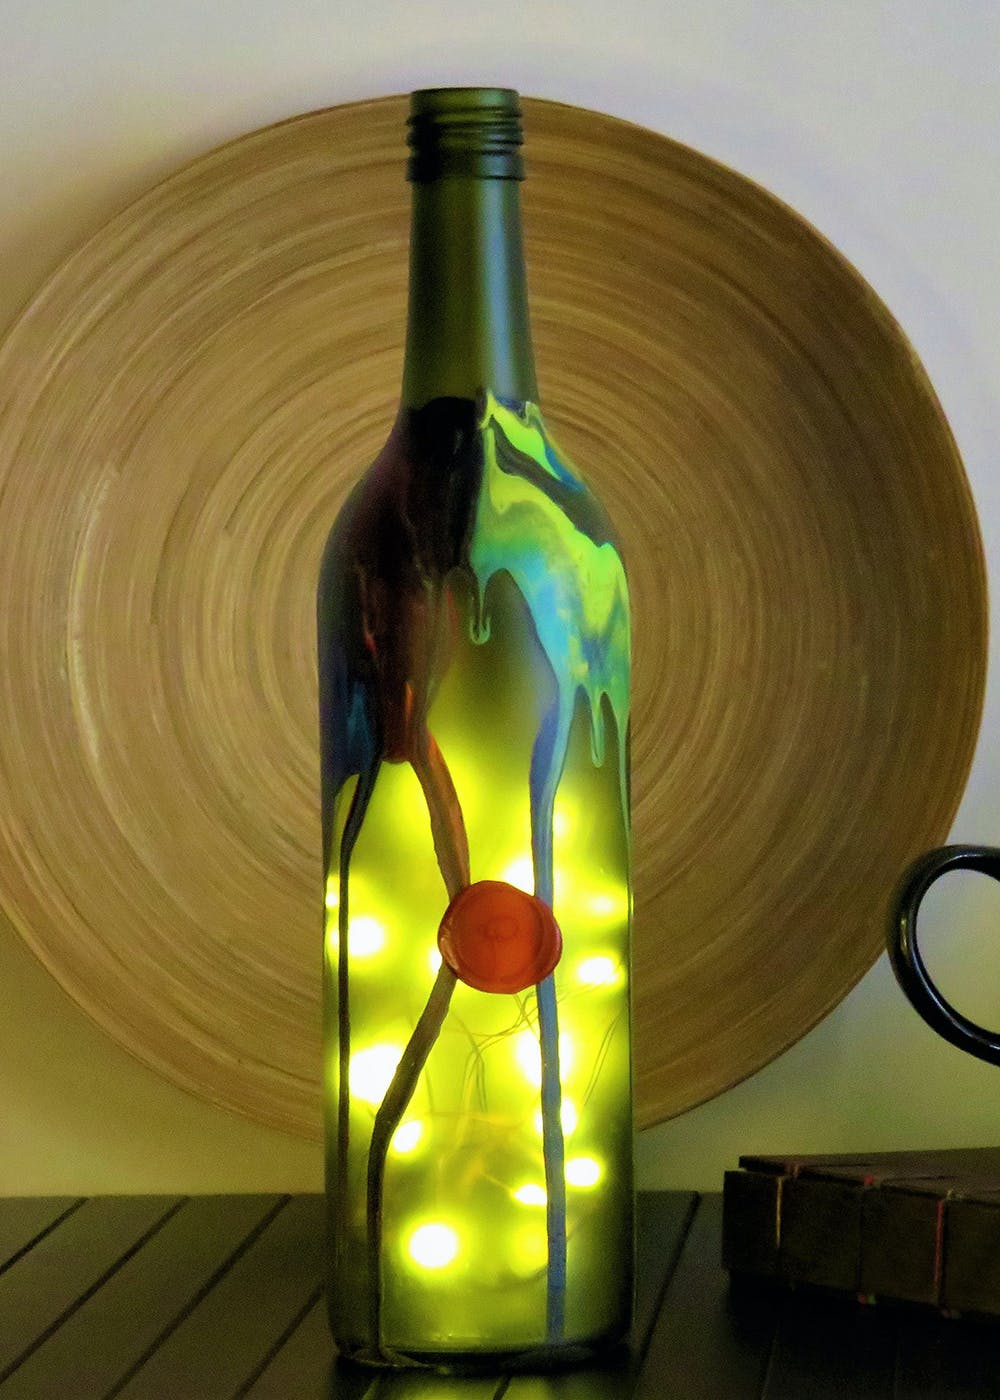 Get Paint Down Textured Bottle-Ful Light at ₹ 1800 | LBB Shop